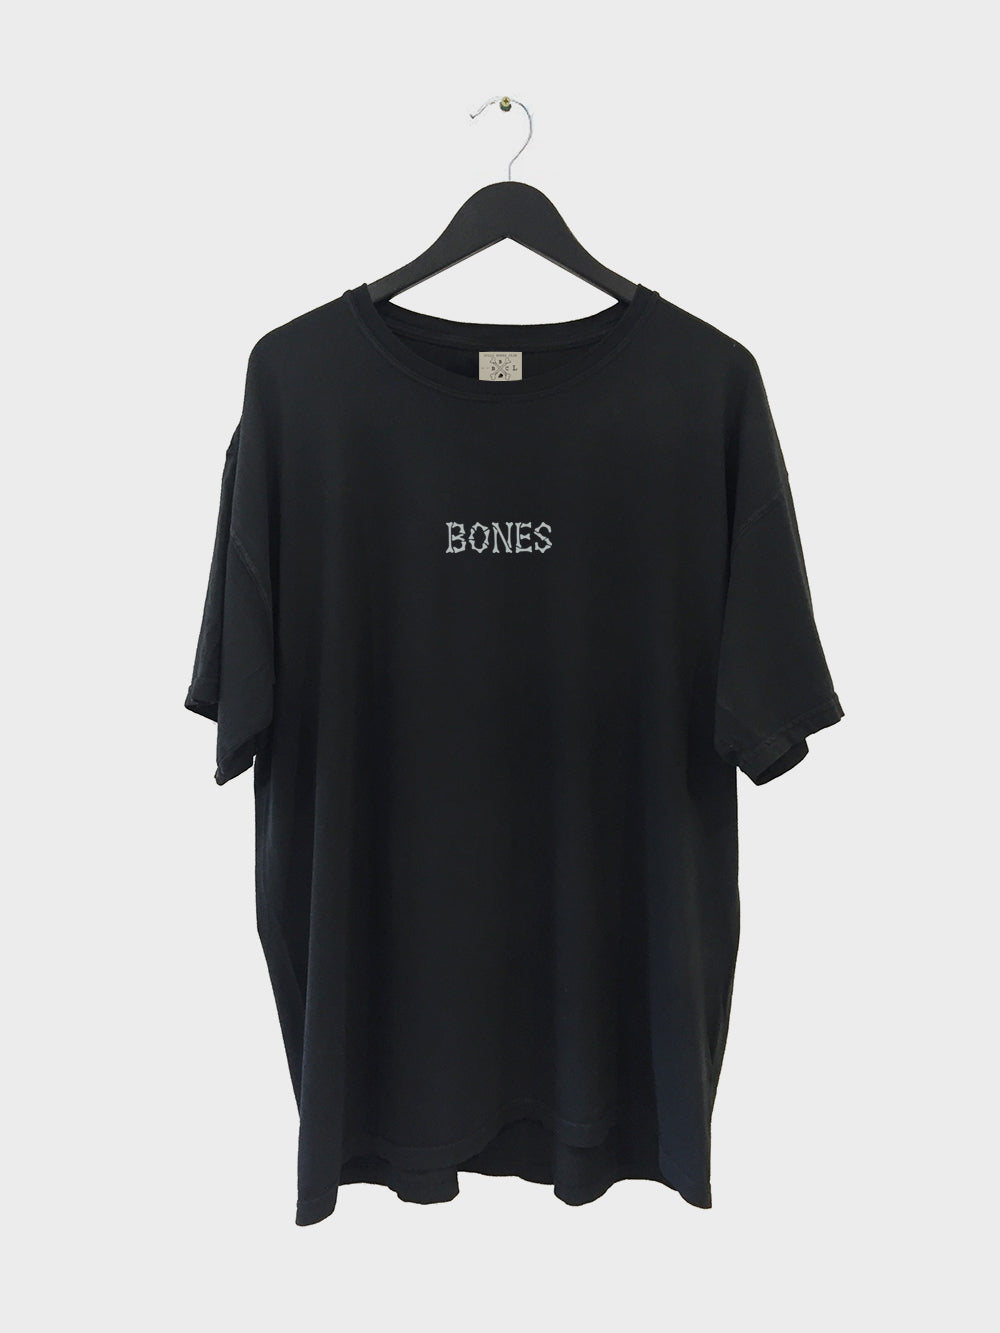 Bones Club Tee - Black